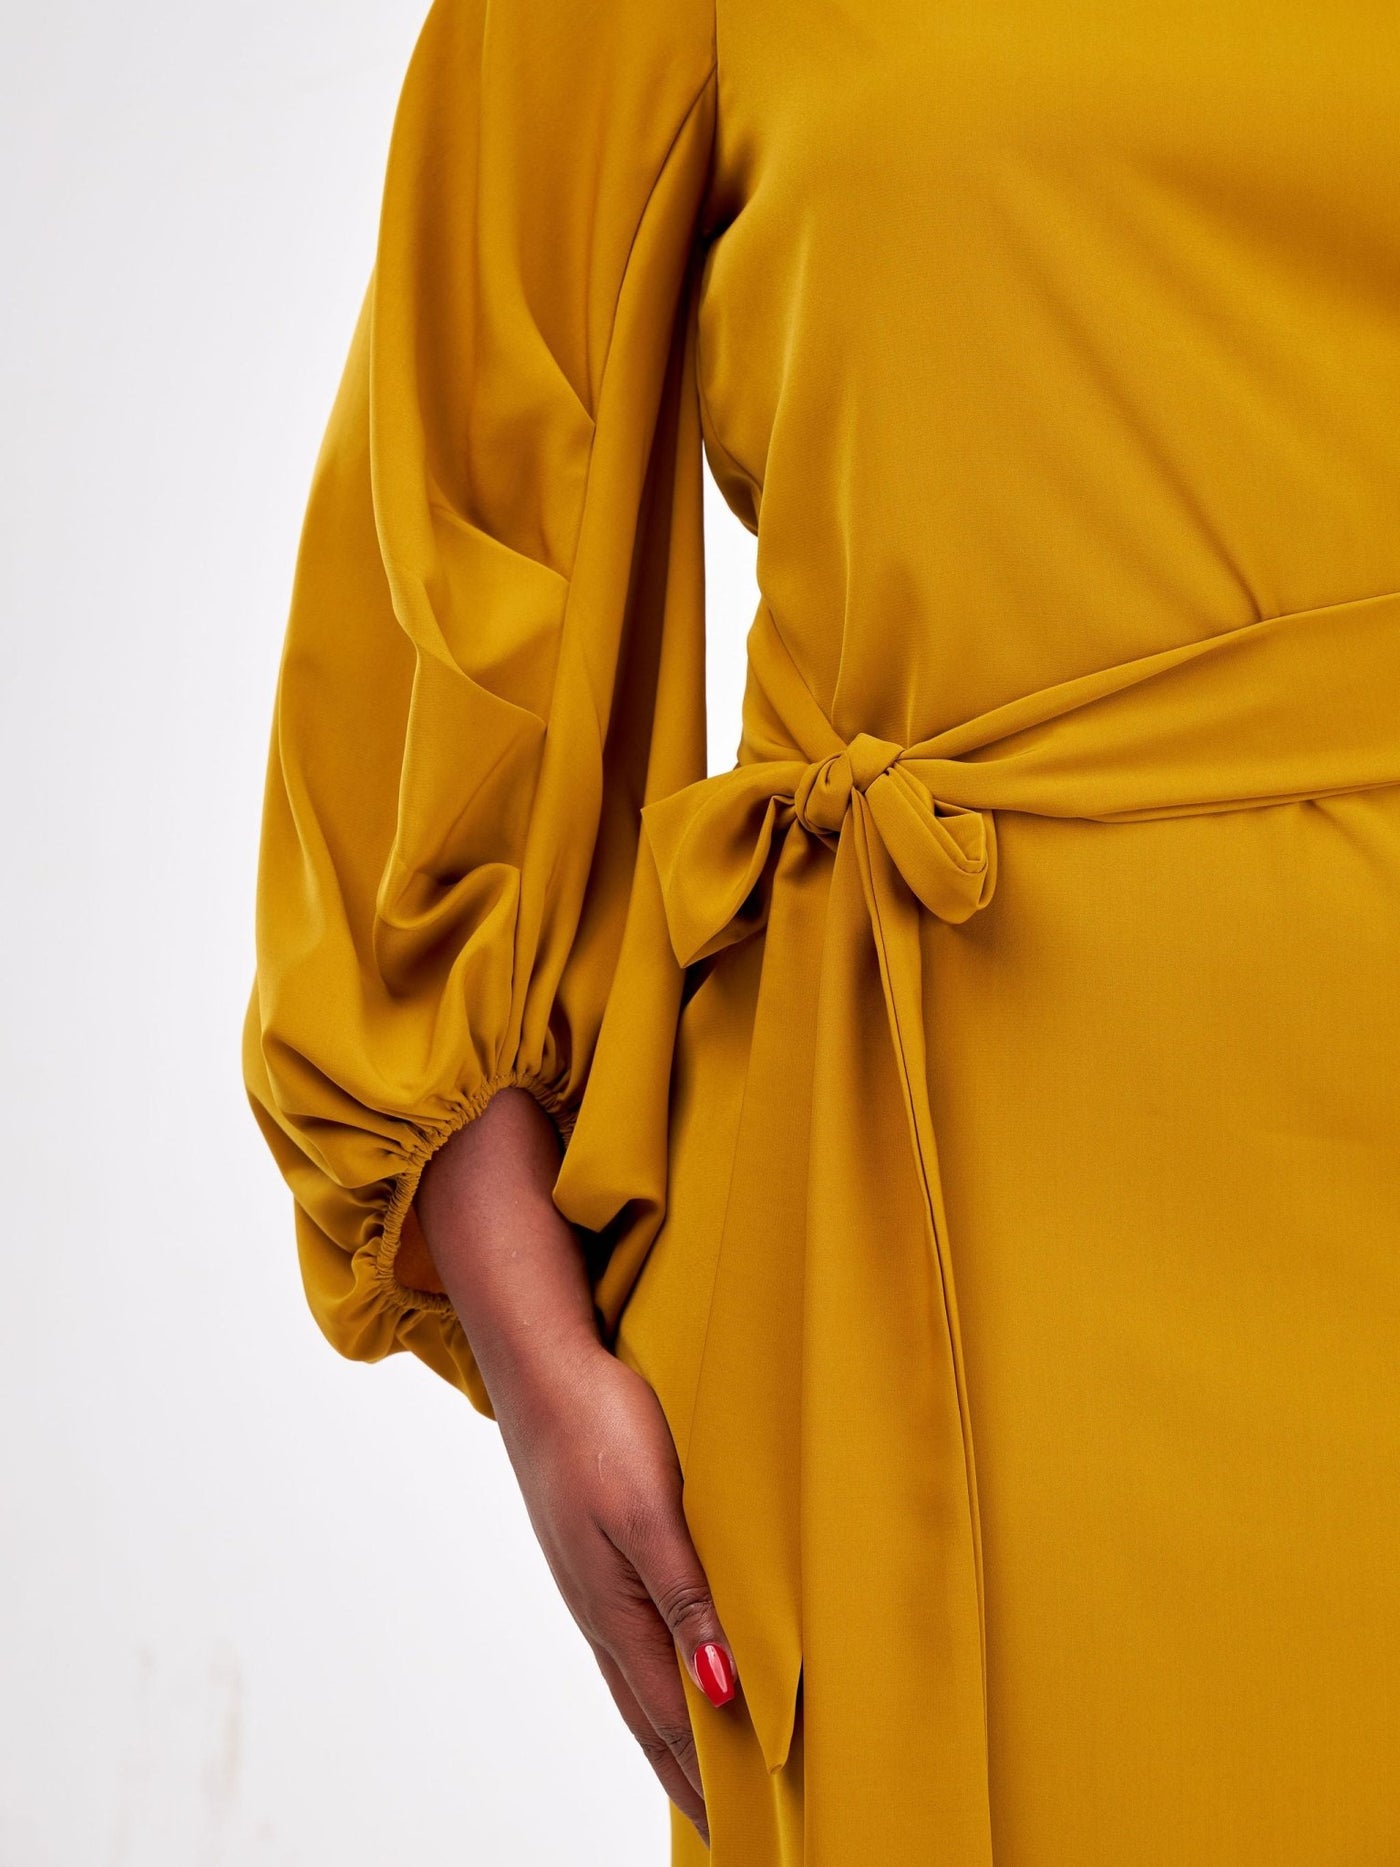 Vivo Zaria Cowl Sleeve Shift Dress - Dark Mustard - Shopzetu